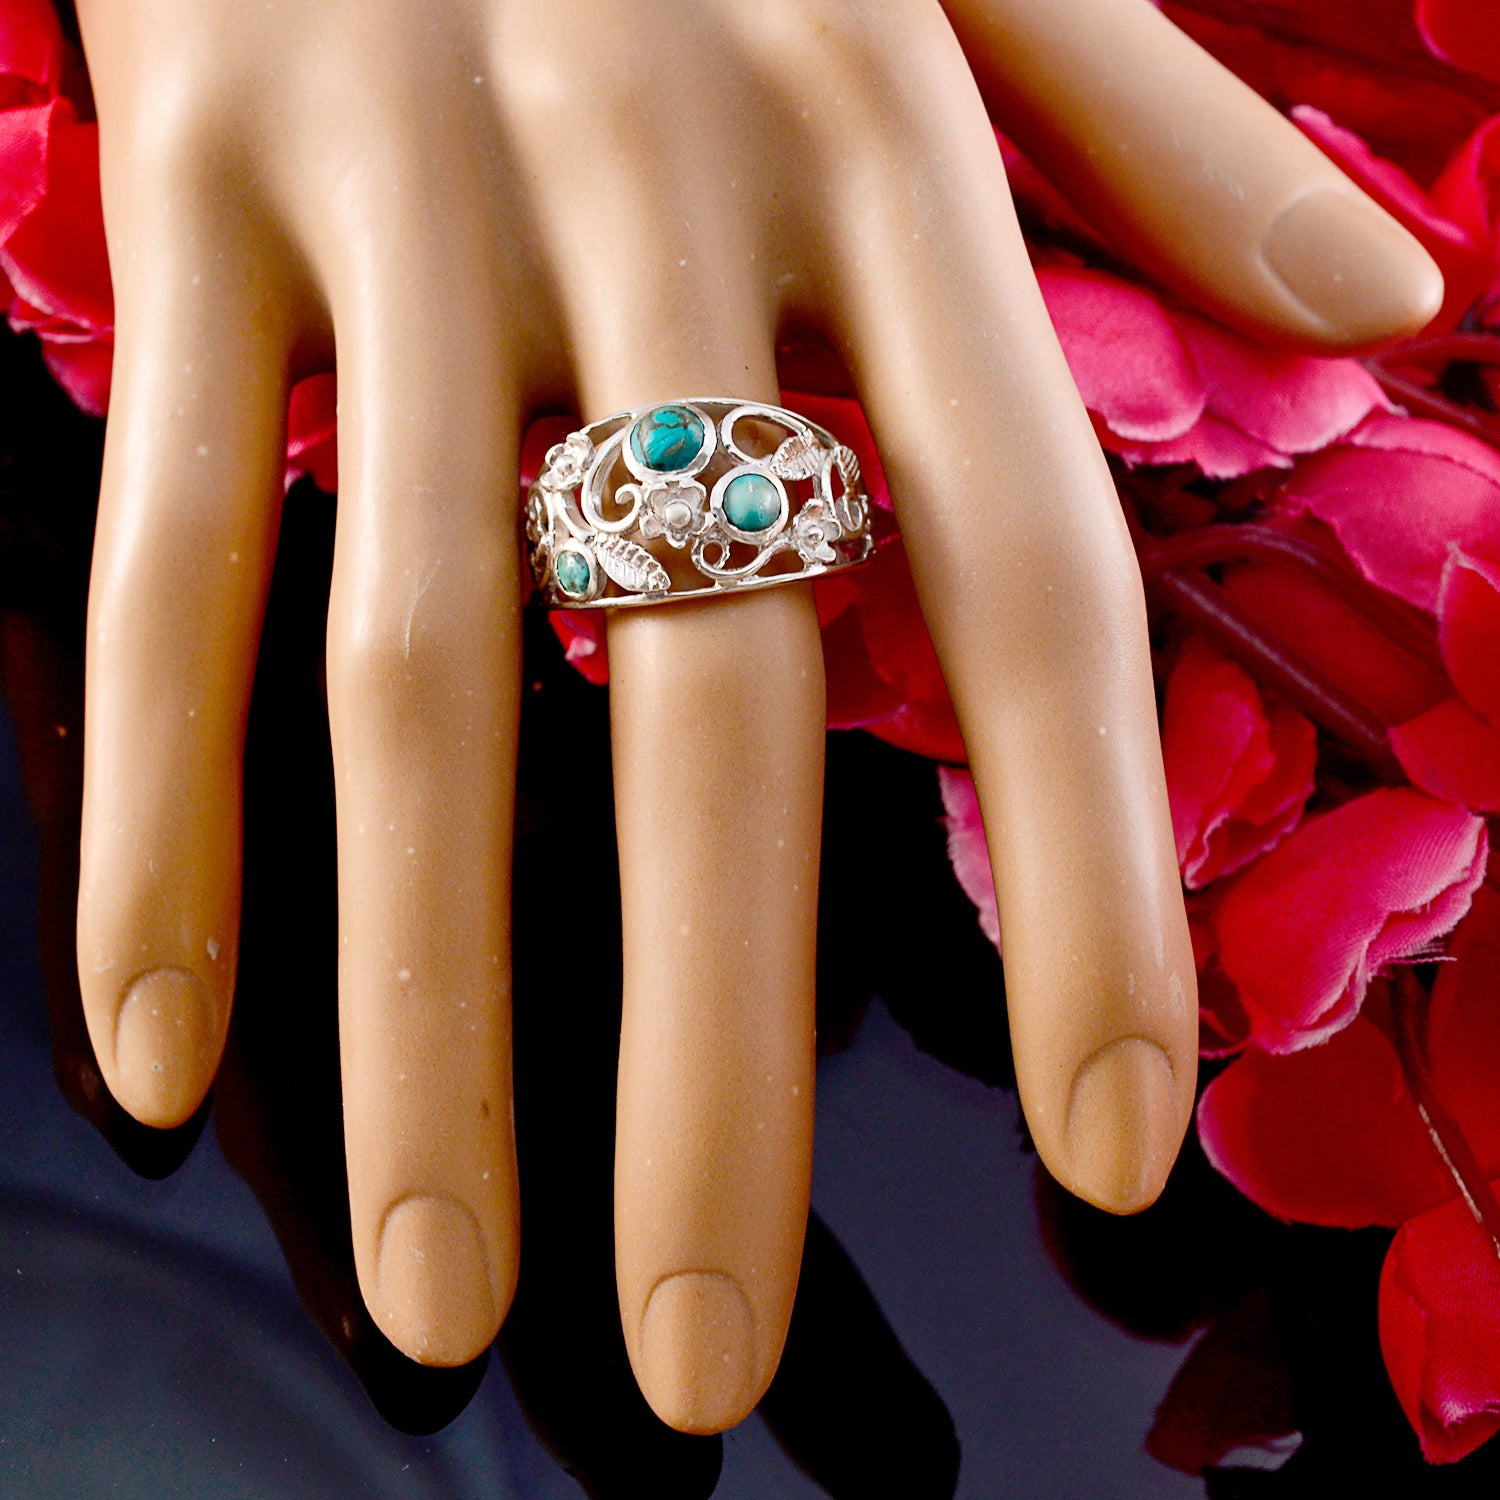 Riyo Excellent Gemstones Turquoise 925 Ring Premier Jewelry Catalog